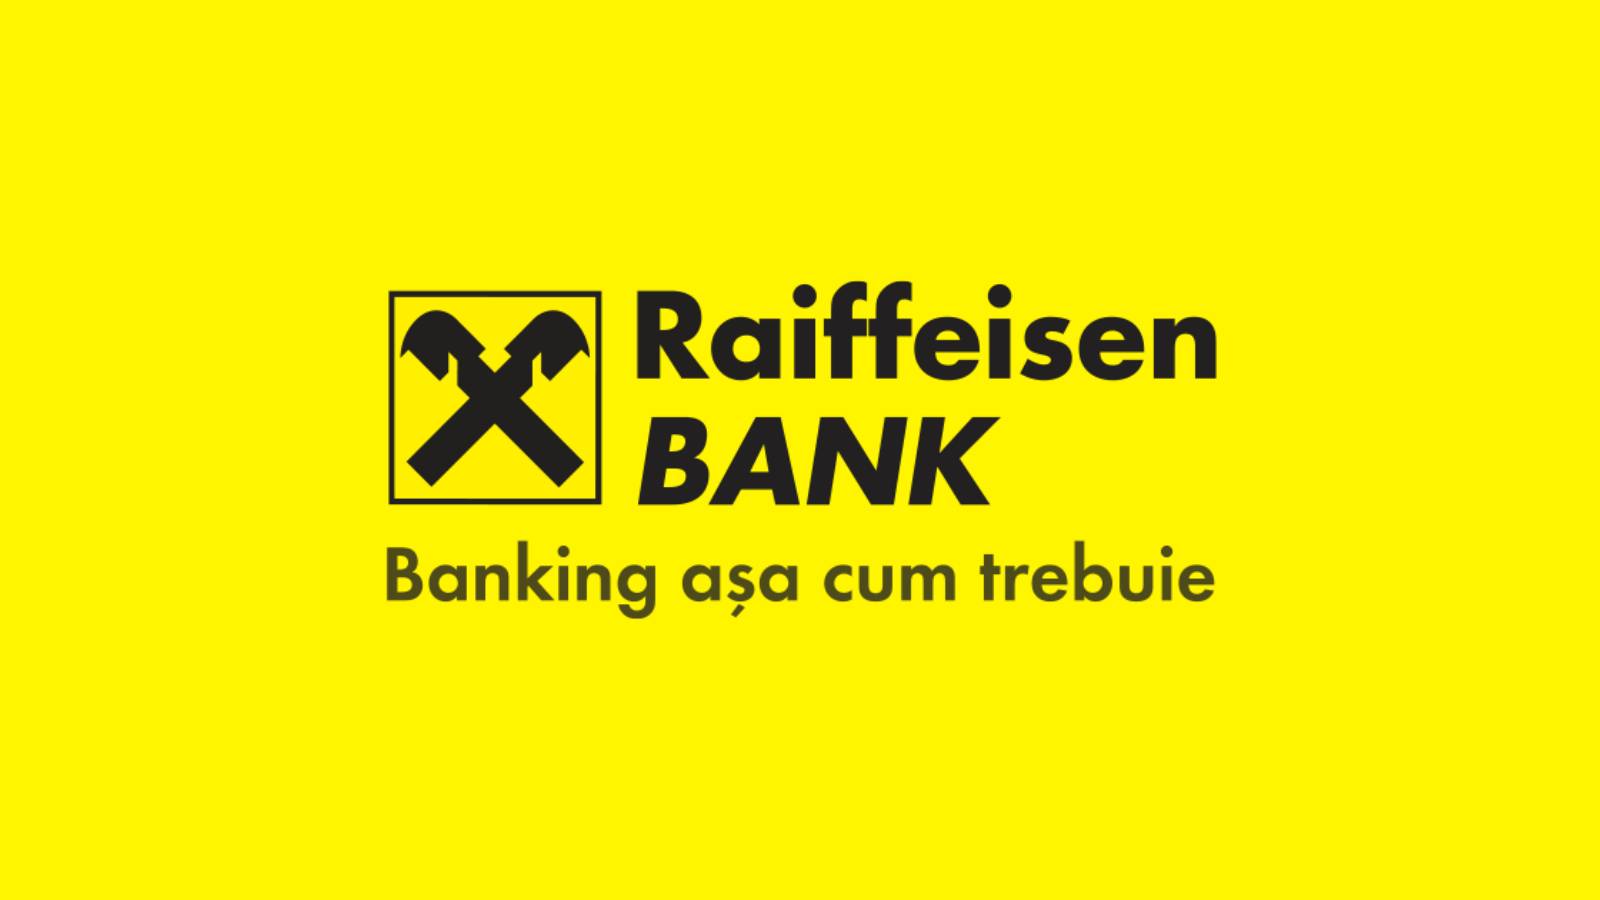 Raiffeisen Bank police